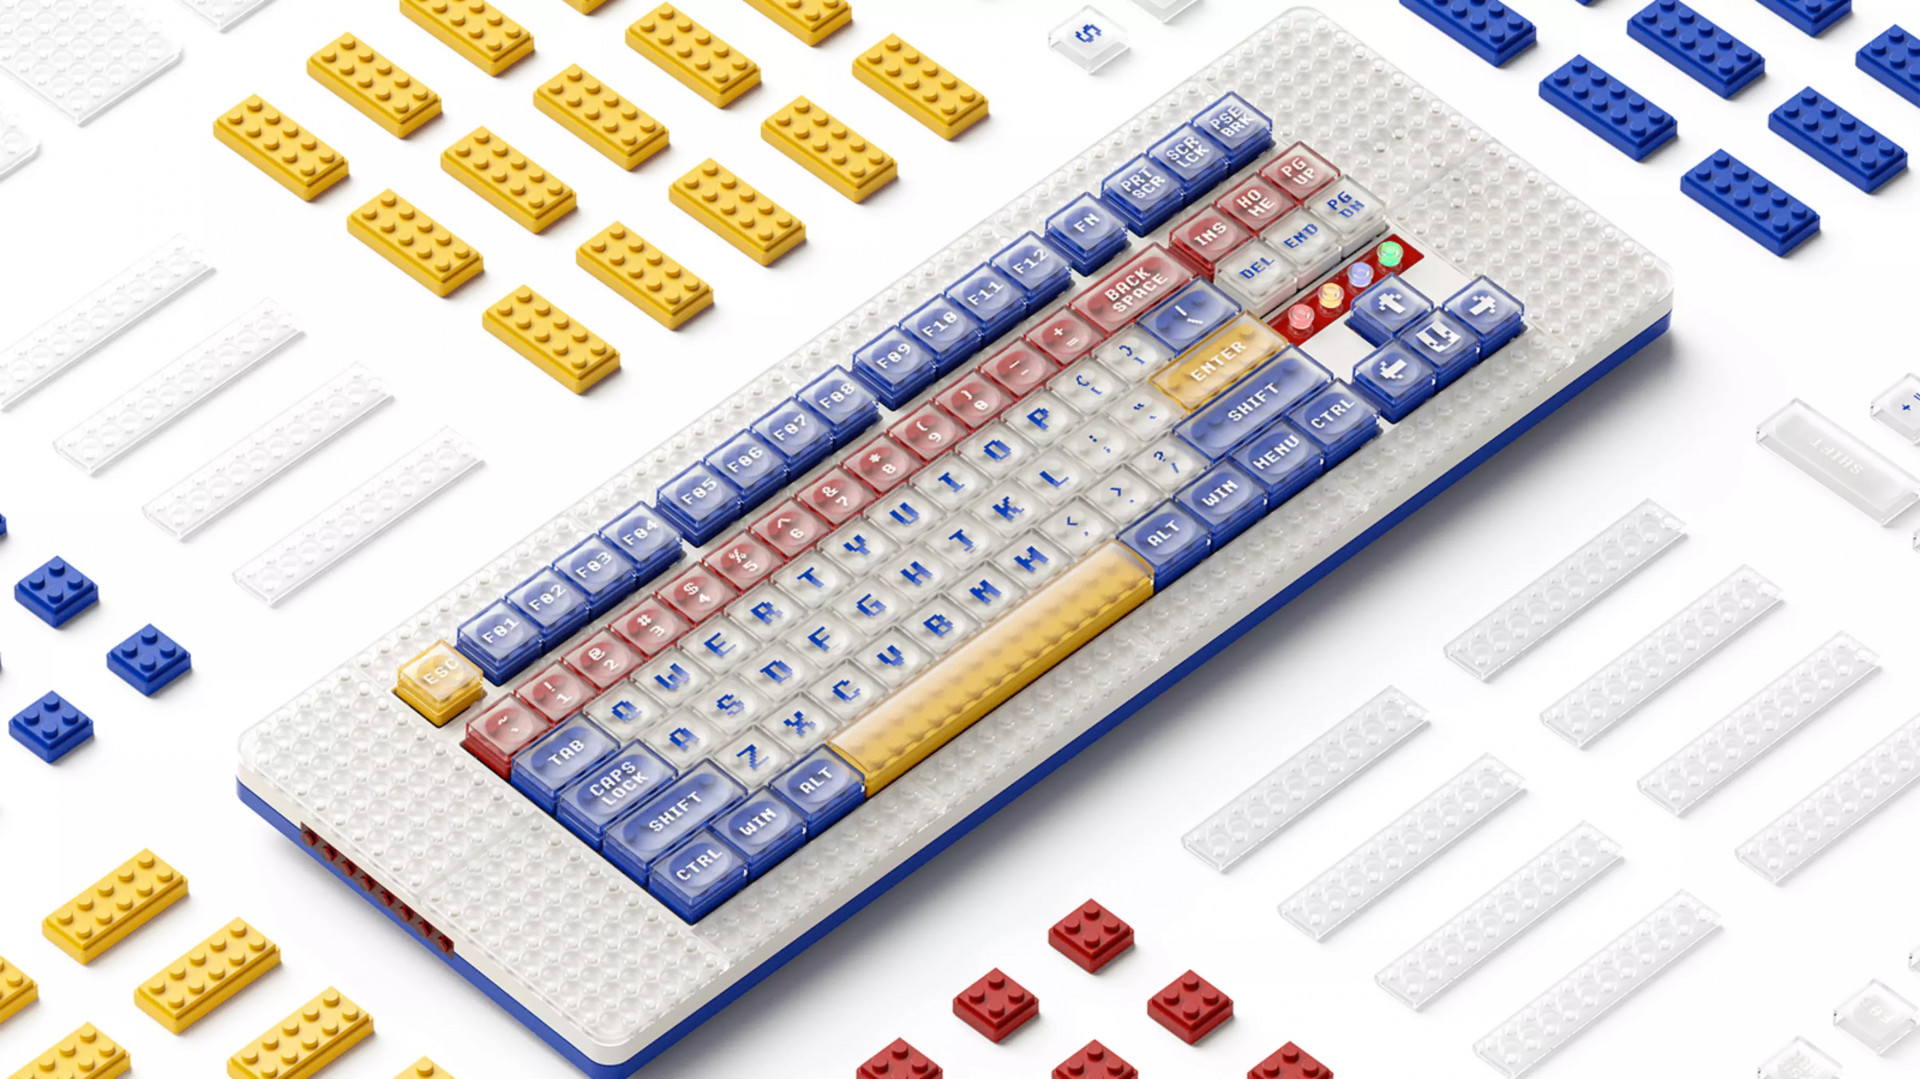 Клавиатура из LEGO скоро появится в продаже. Хотите